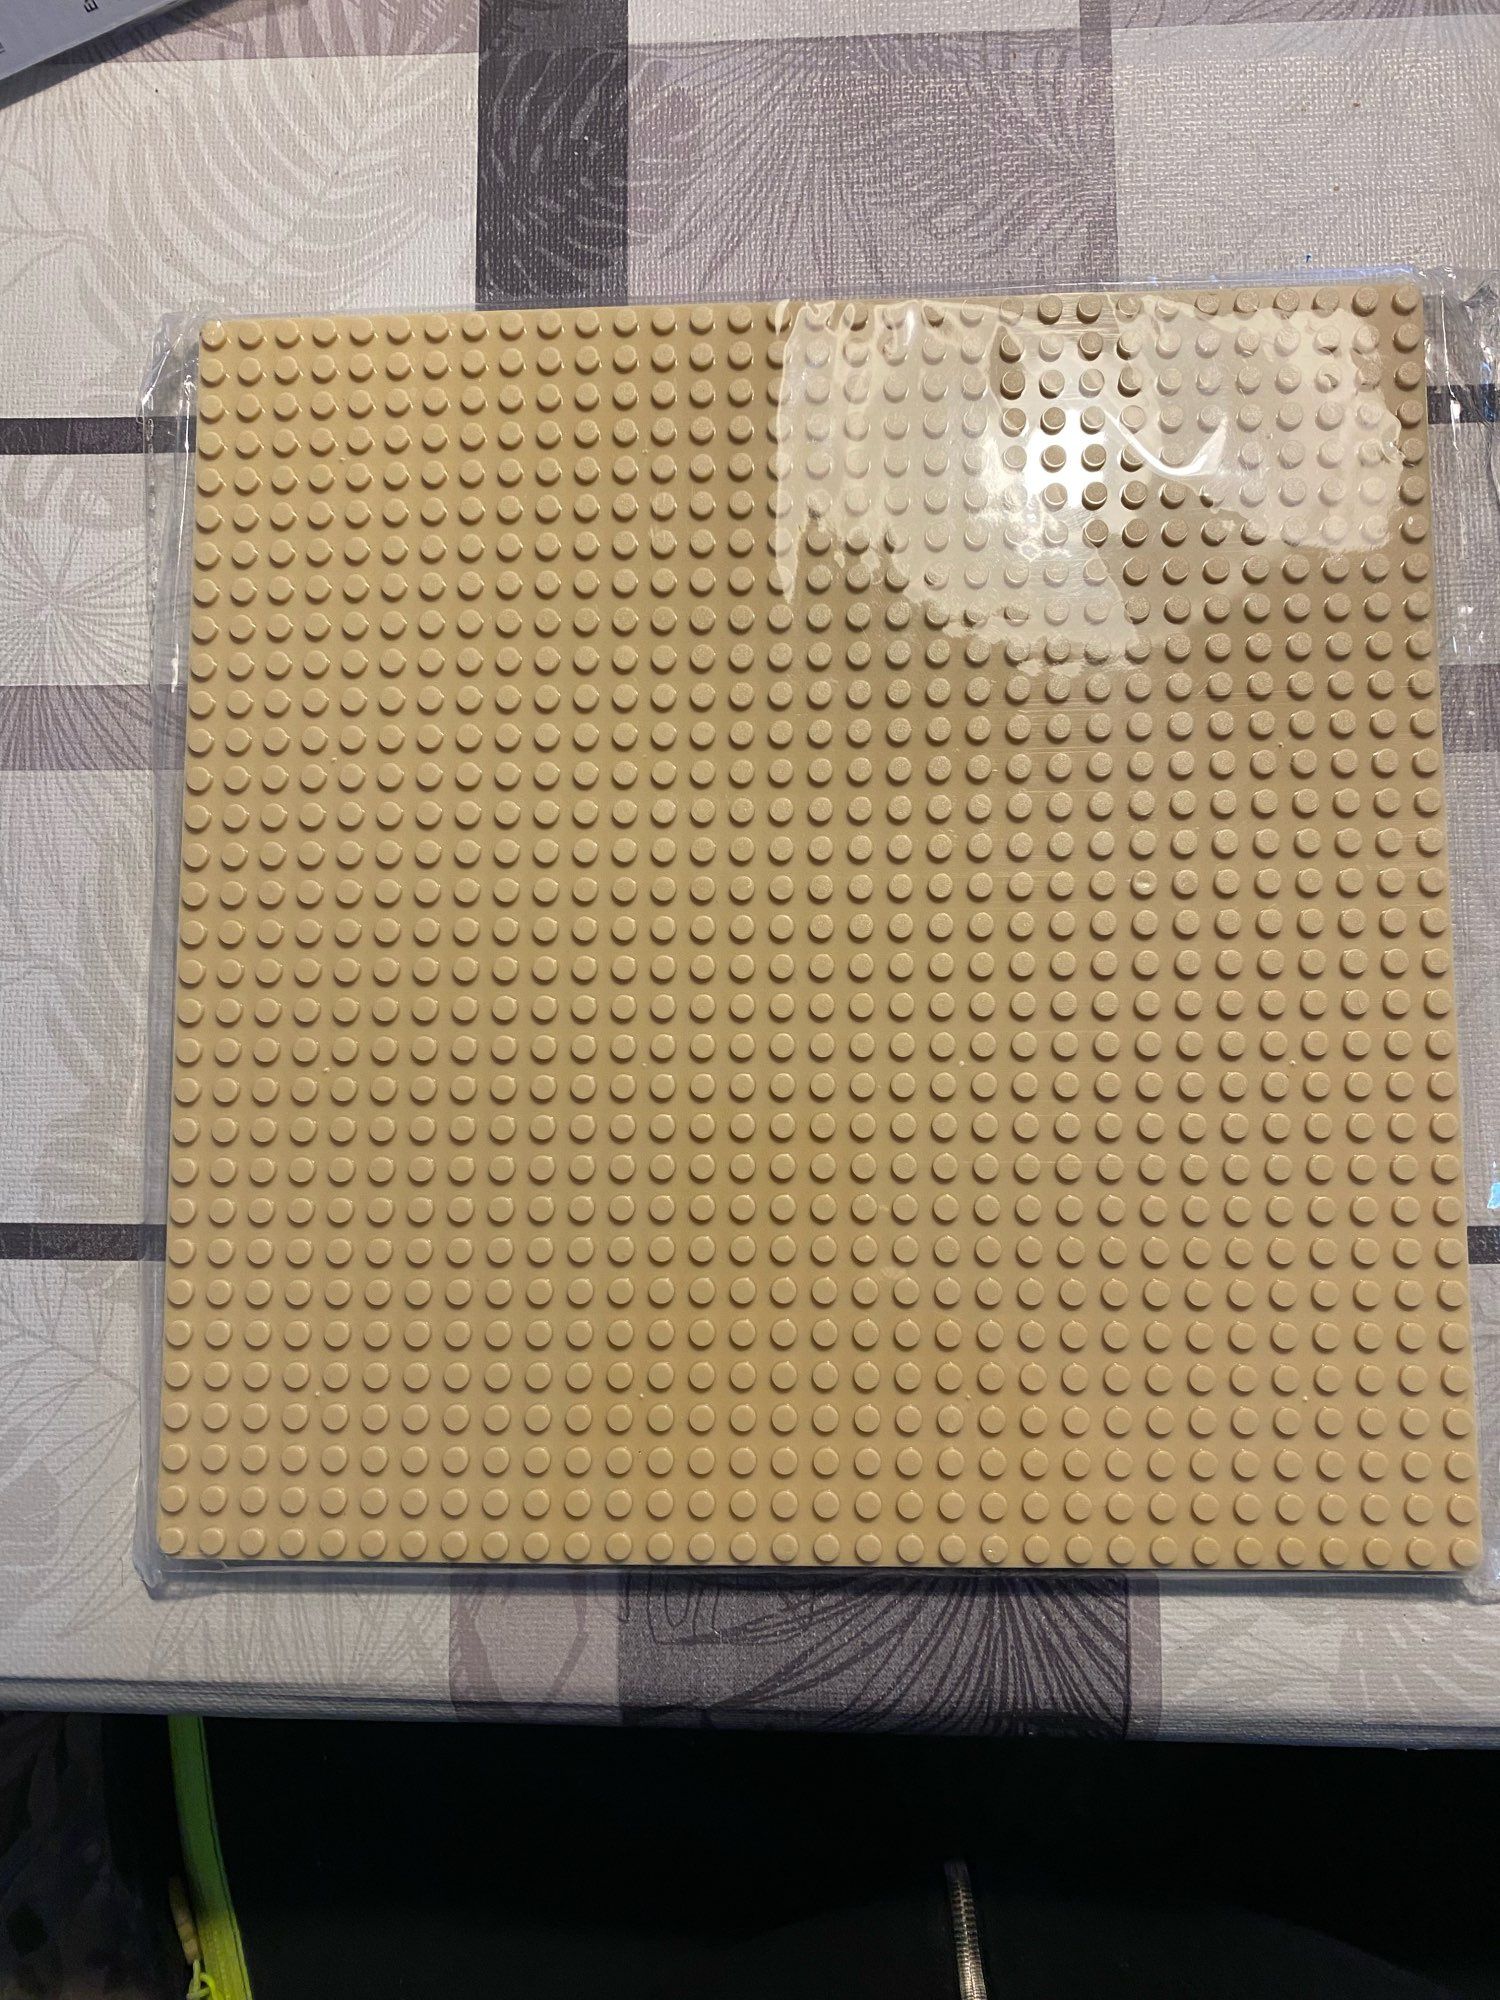 Пластина Лего доска для lego конструктор платформа поле для творчества